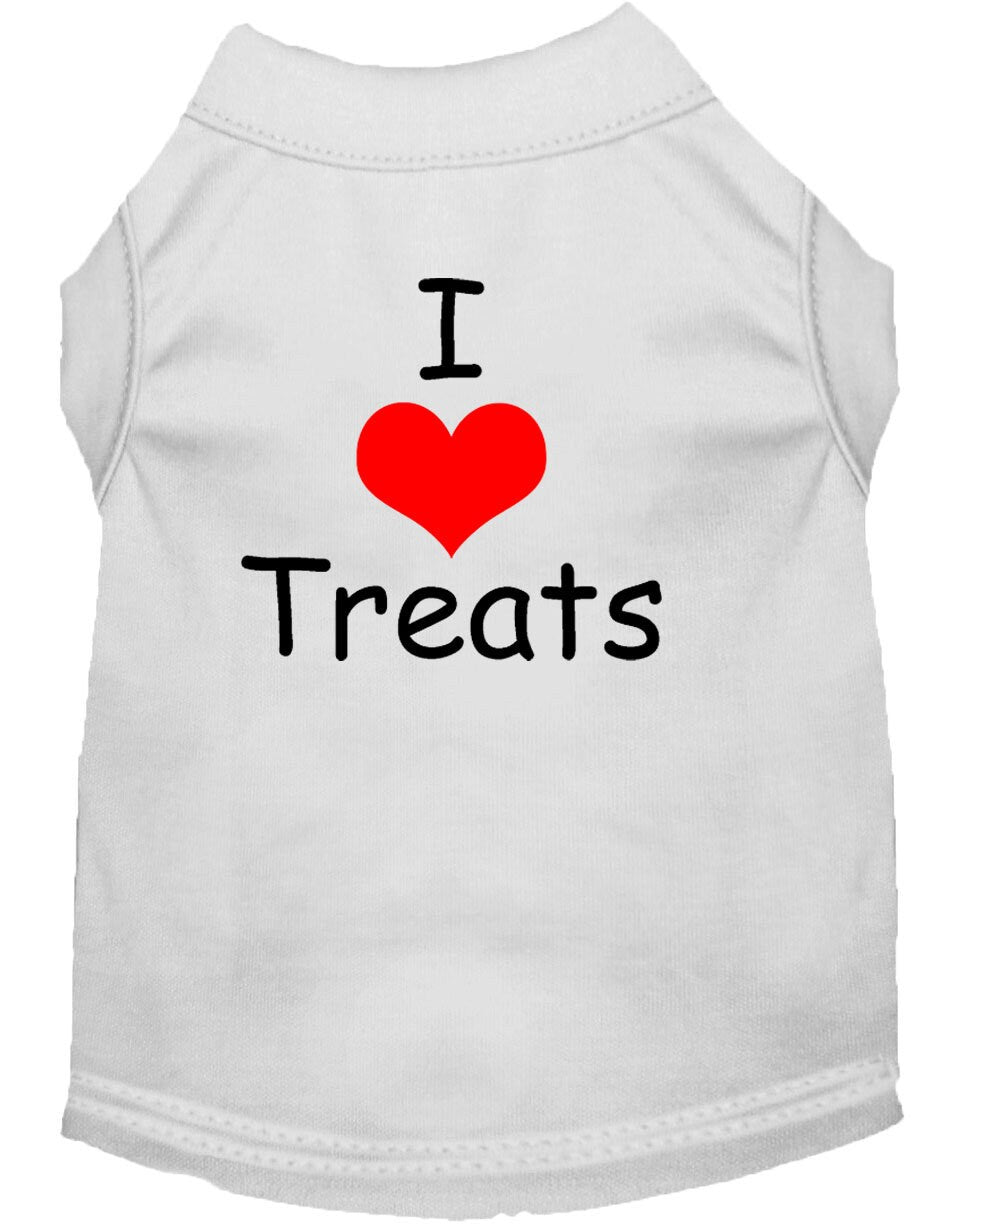 Pet Dog & Cat Shirt Screen Printed, "I Love Treats"